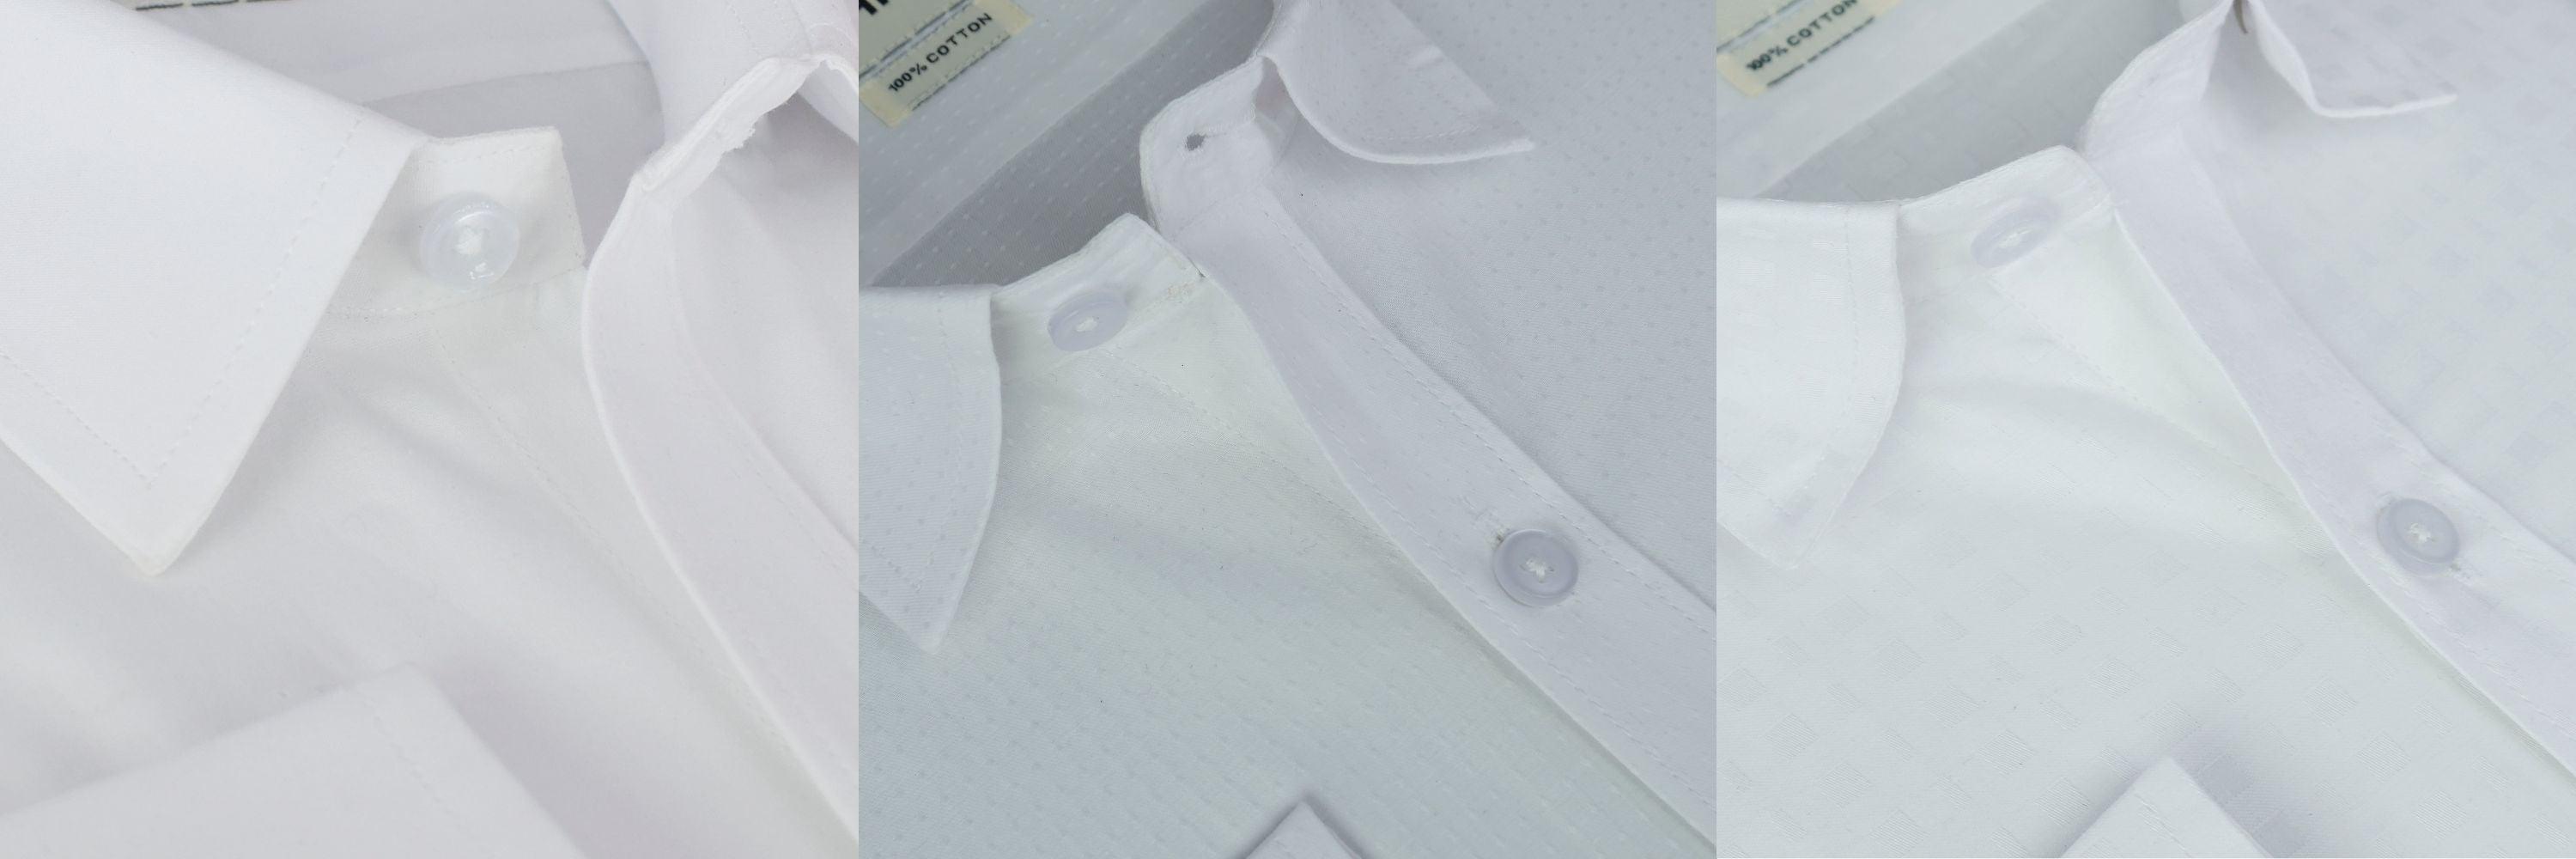 White Formal Shirts for men